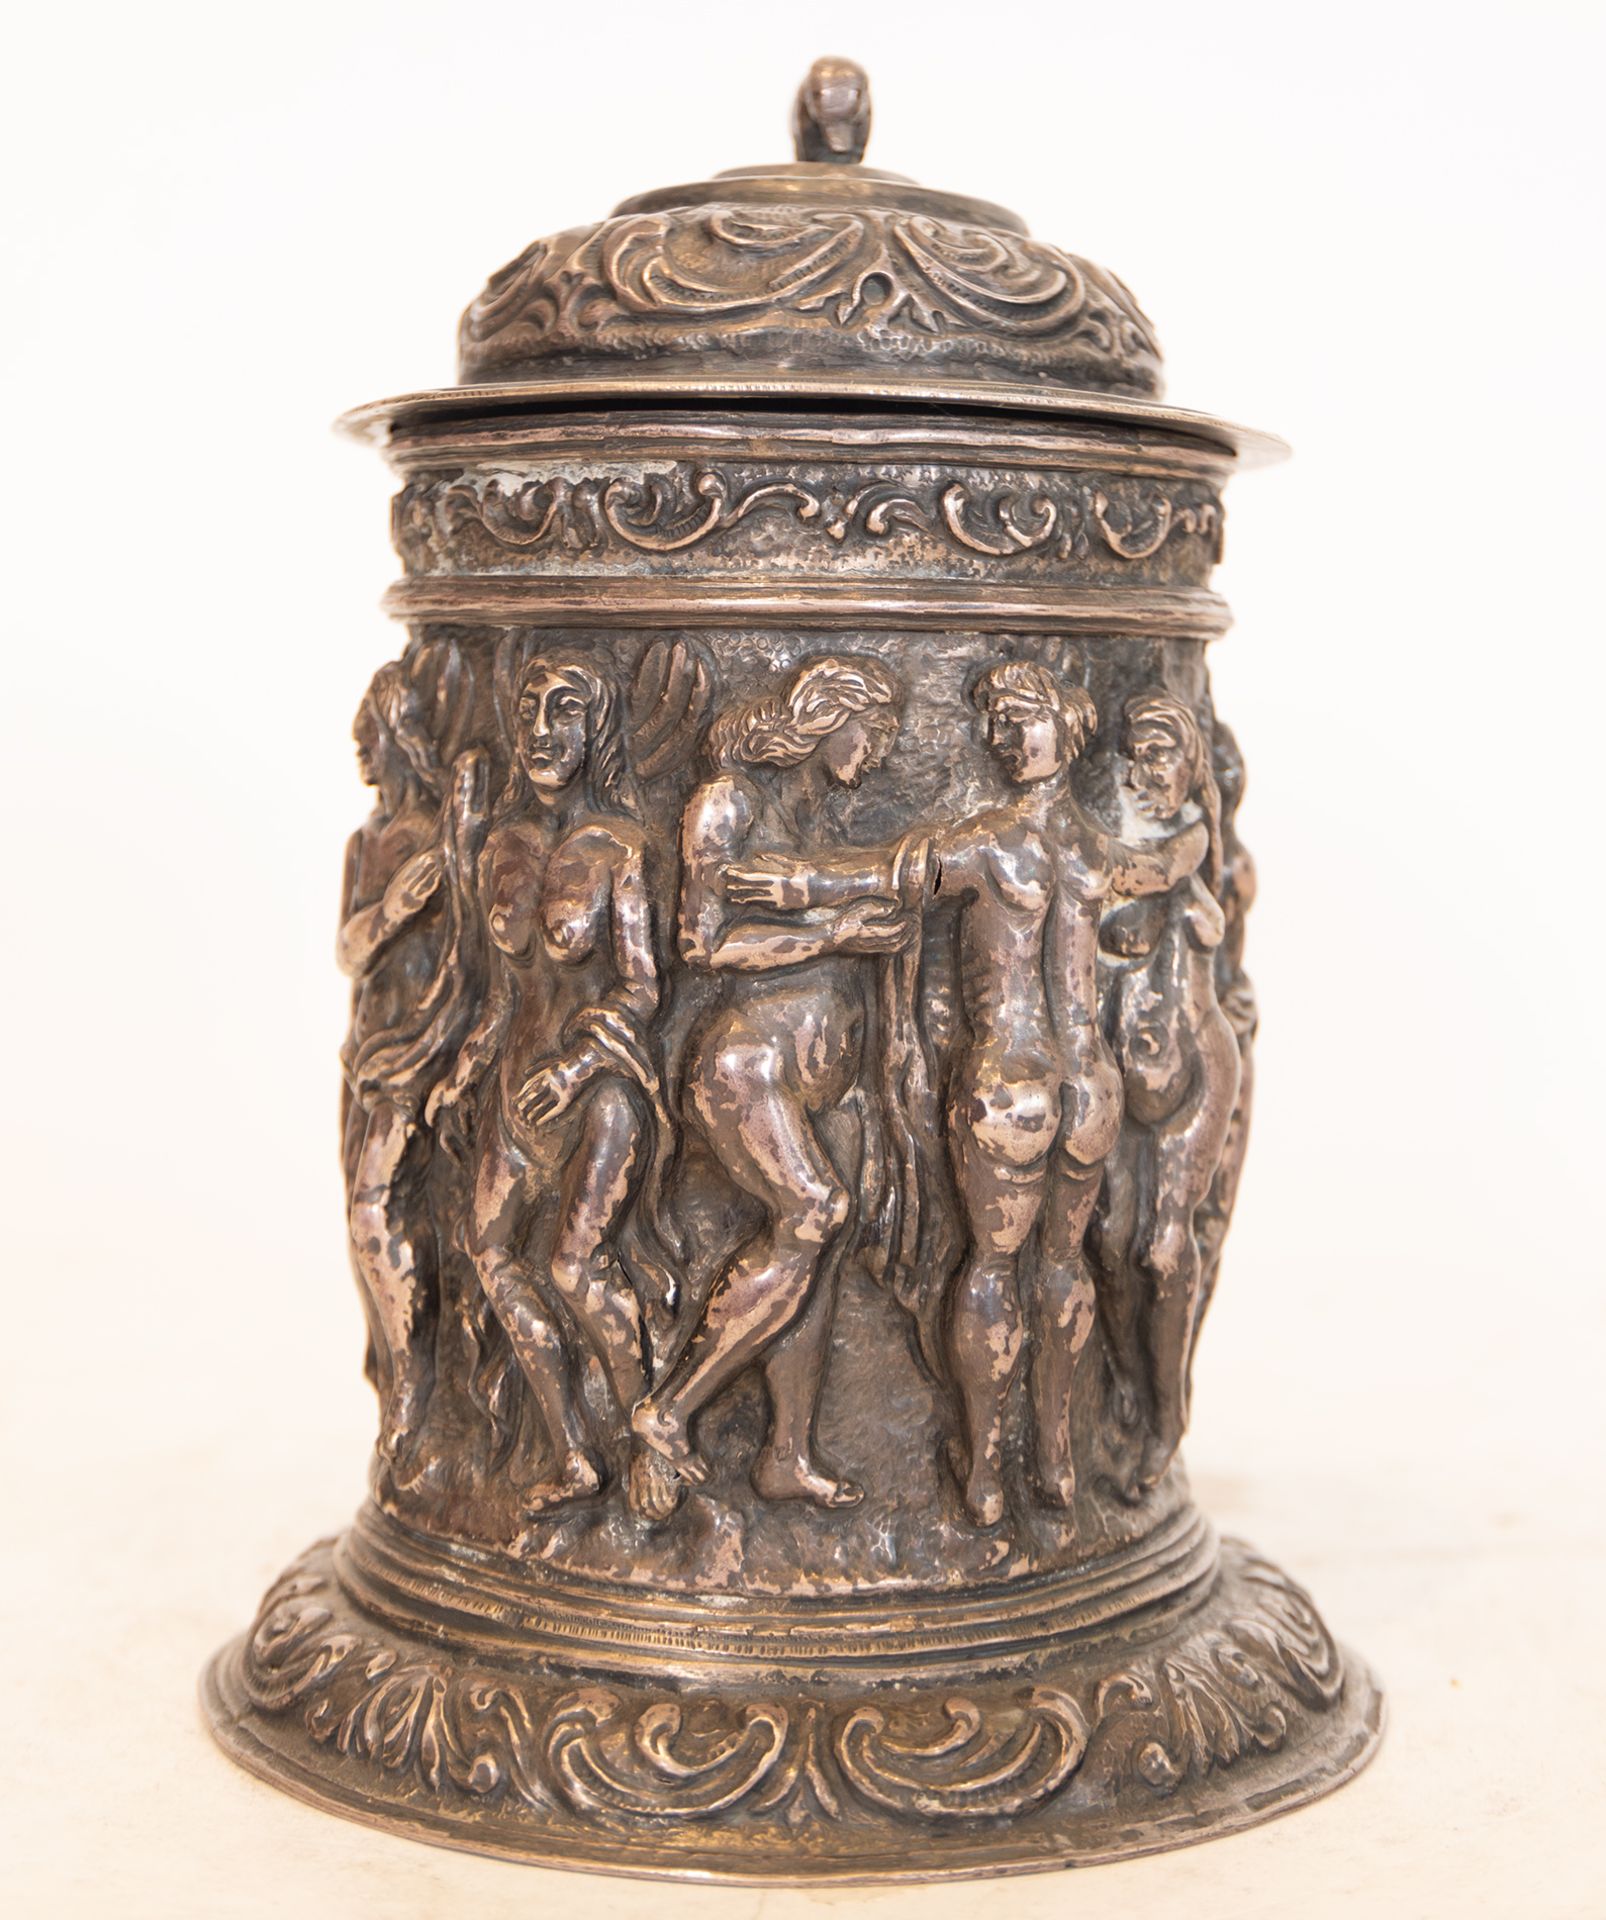 Tankard-type jug in Italian silver with Bacchanalian motifs, Italian school of the 18th - 19th centu - Image 2 of 5